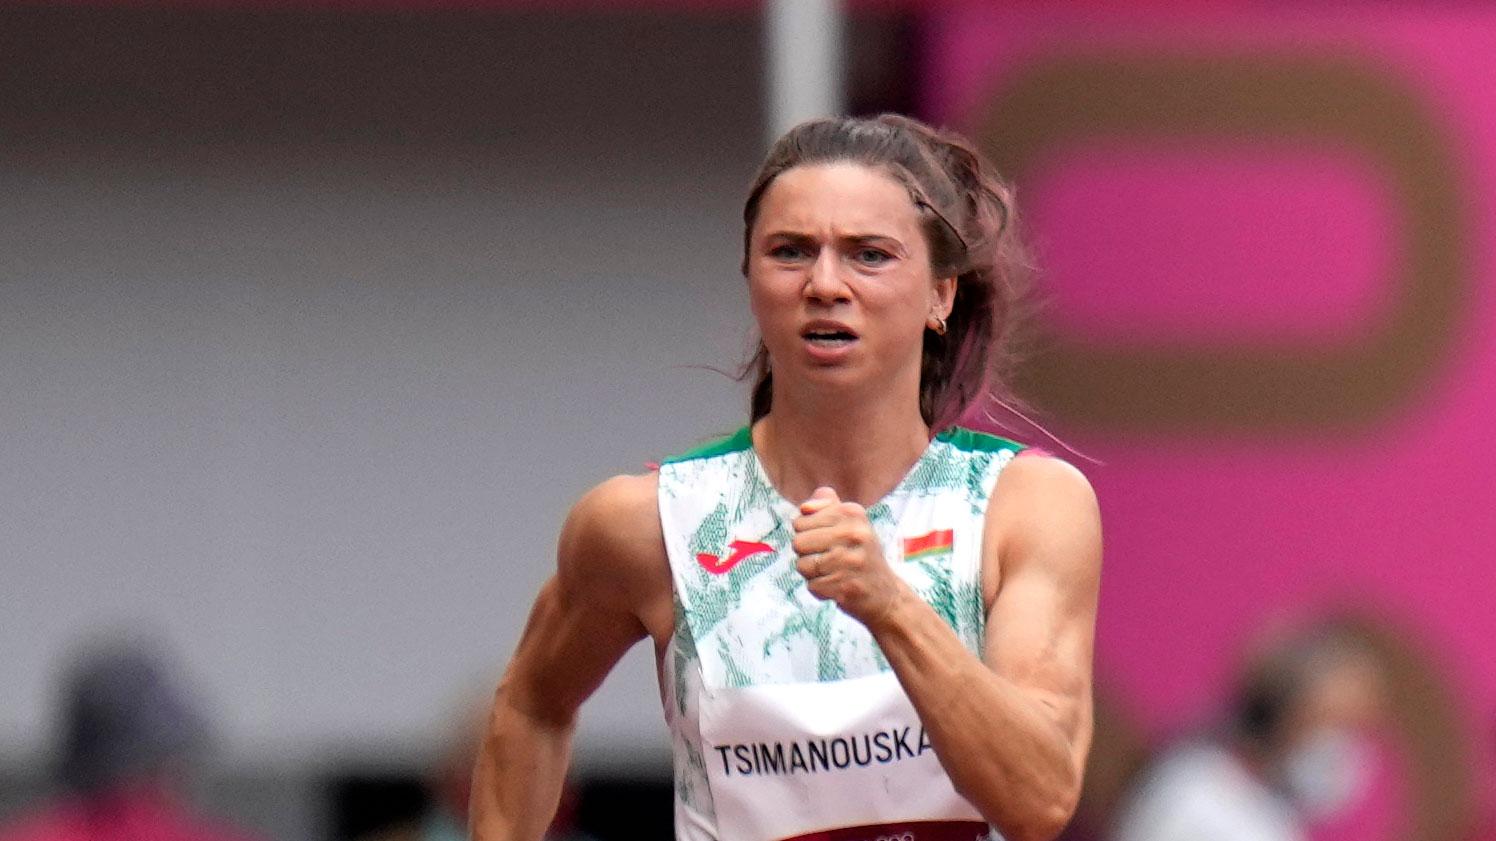 Krystsina Tsimanouskaya is shown running and wearing the track and field uniform for Belarus.